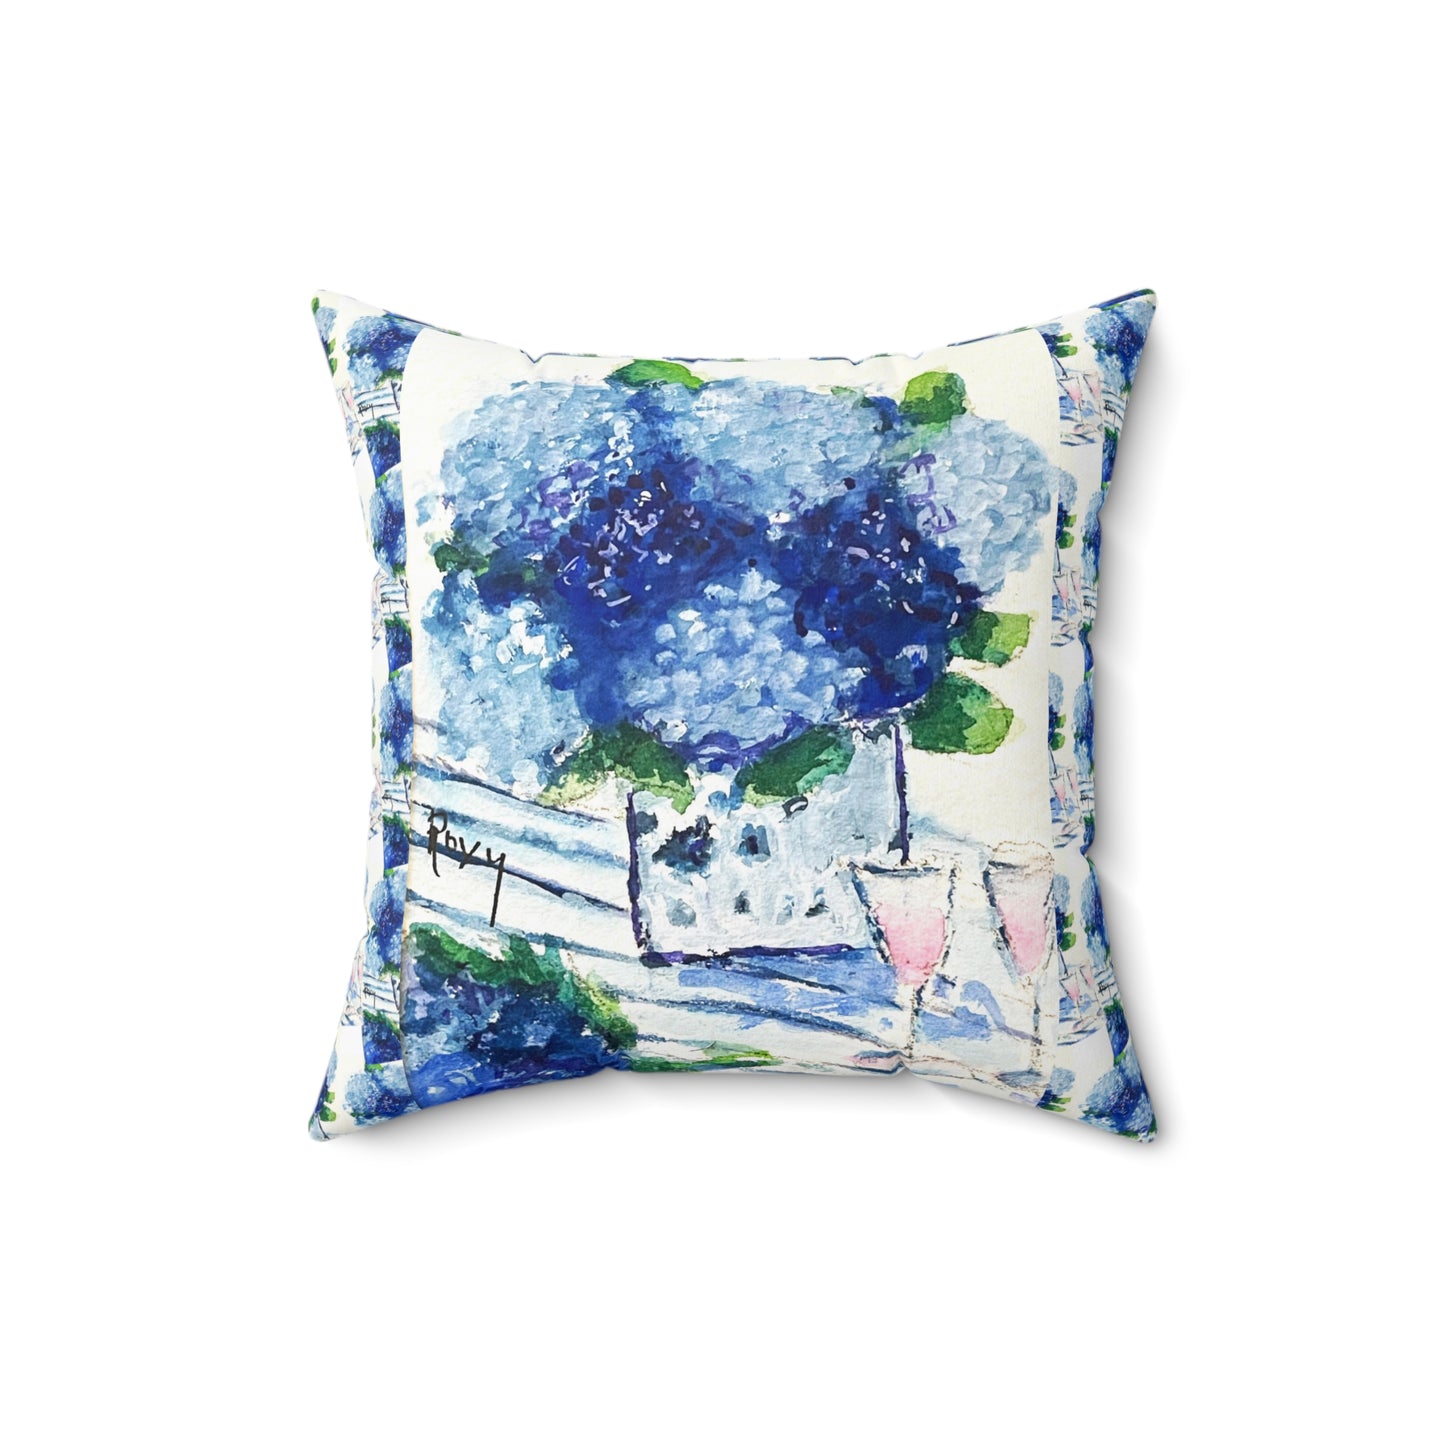 Bue Hydrangeas Indoor Spun Polyester Square Pillow